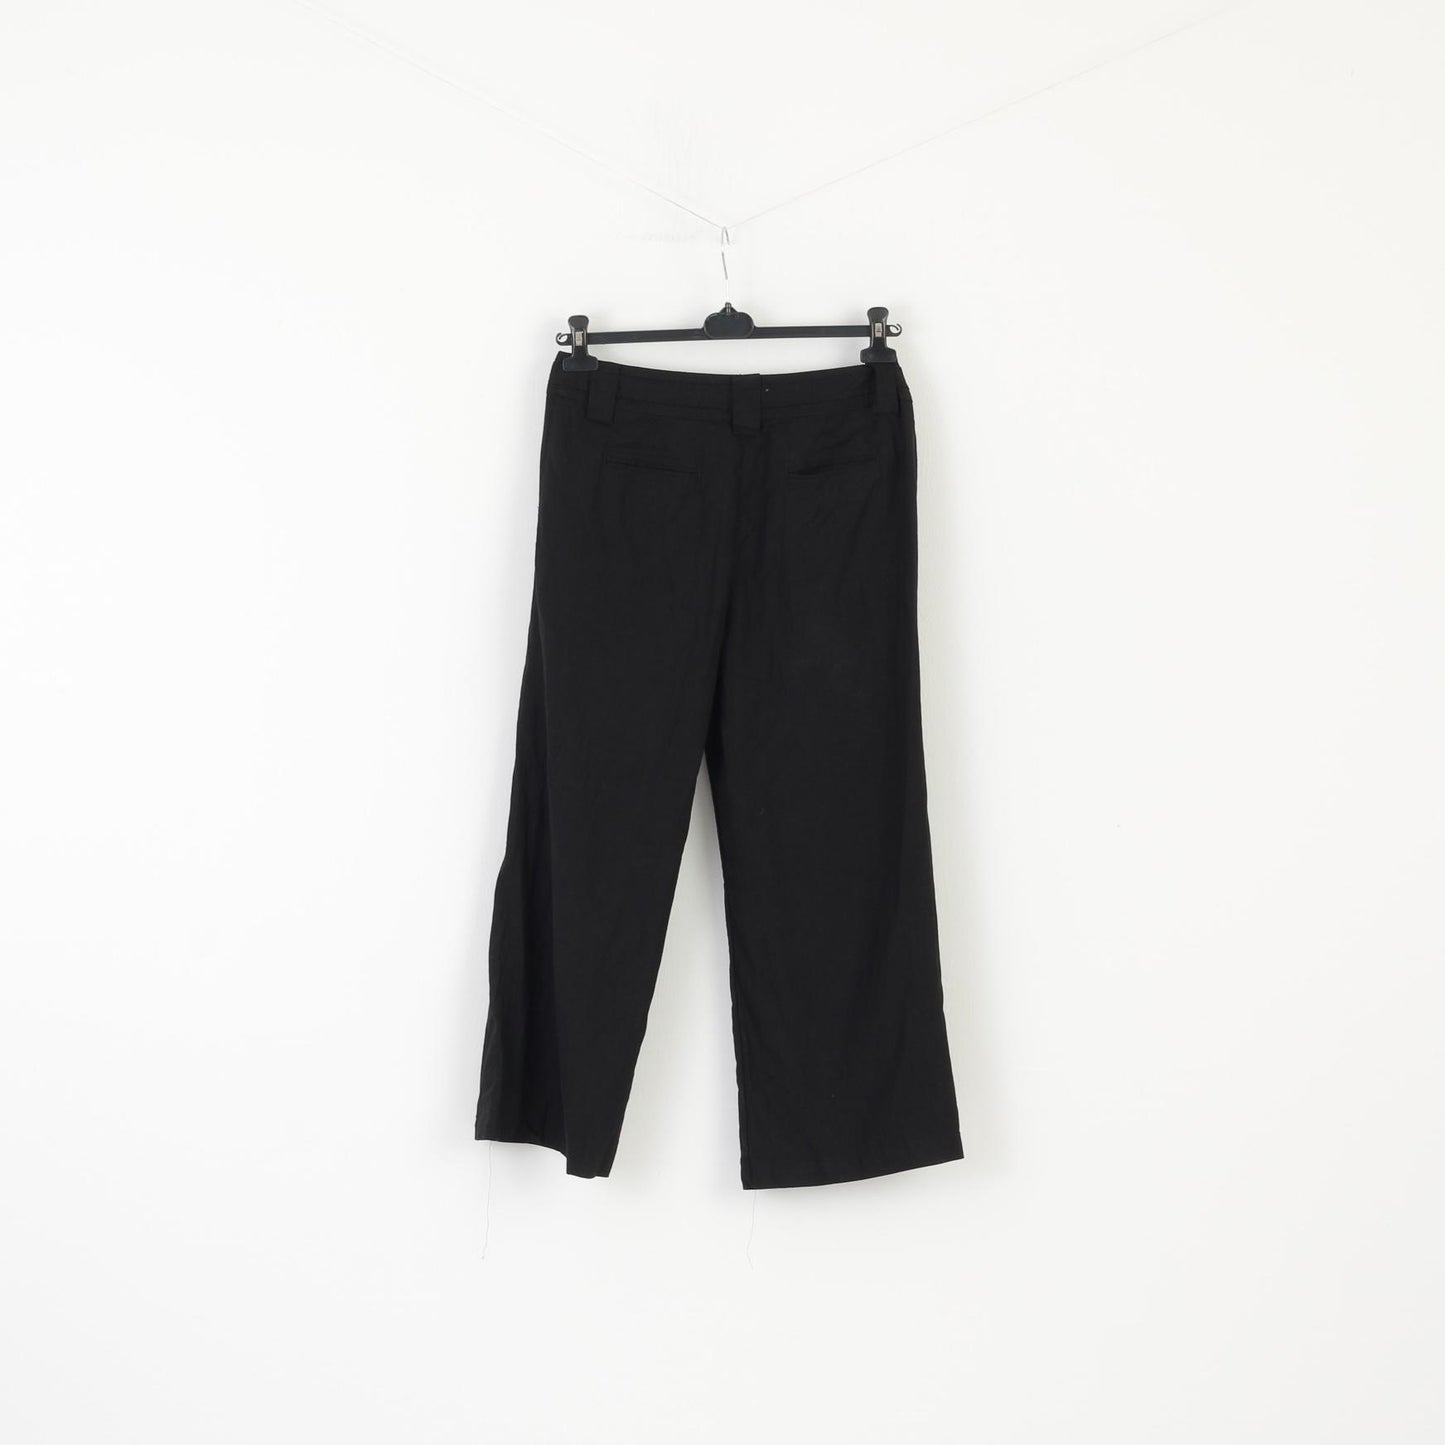 M&Co Women 14 Trousers Black Linen Viscose Blend Summer Wide Leg Coulottes